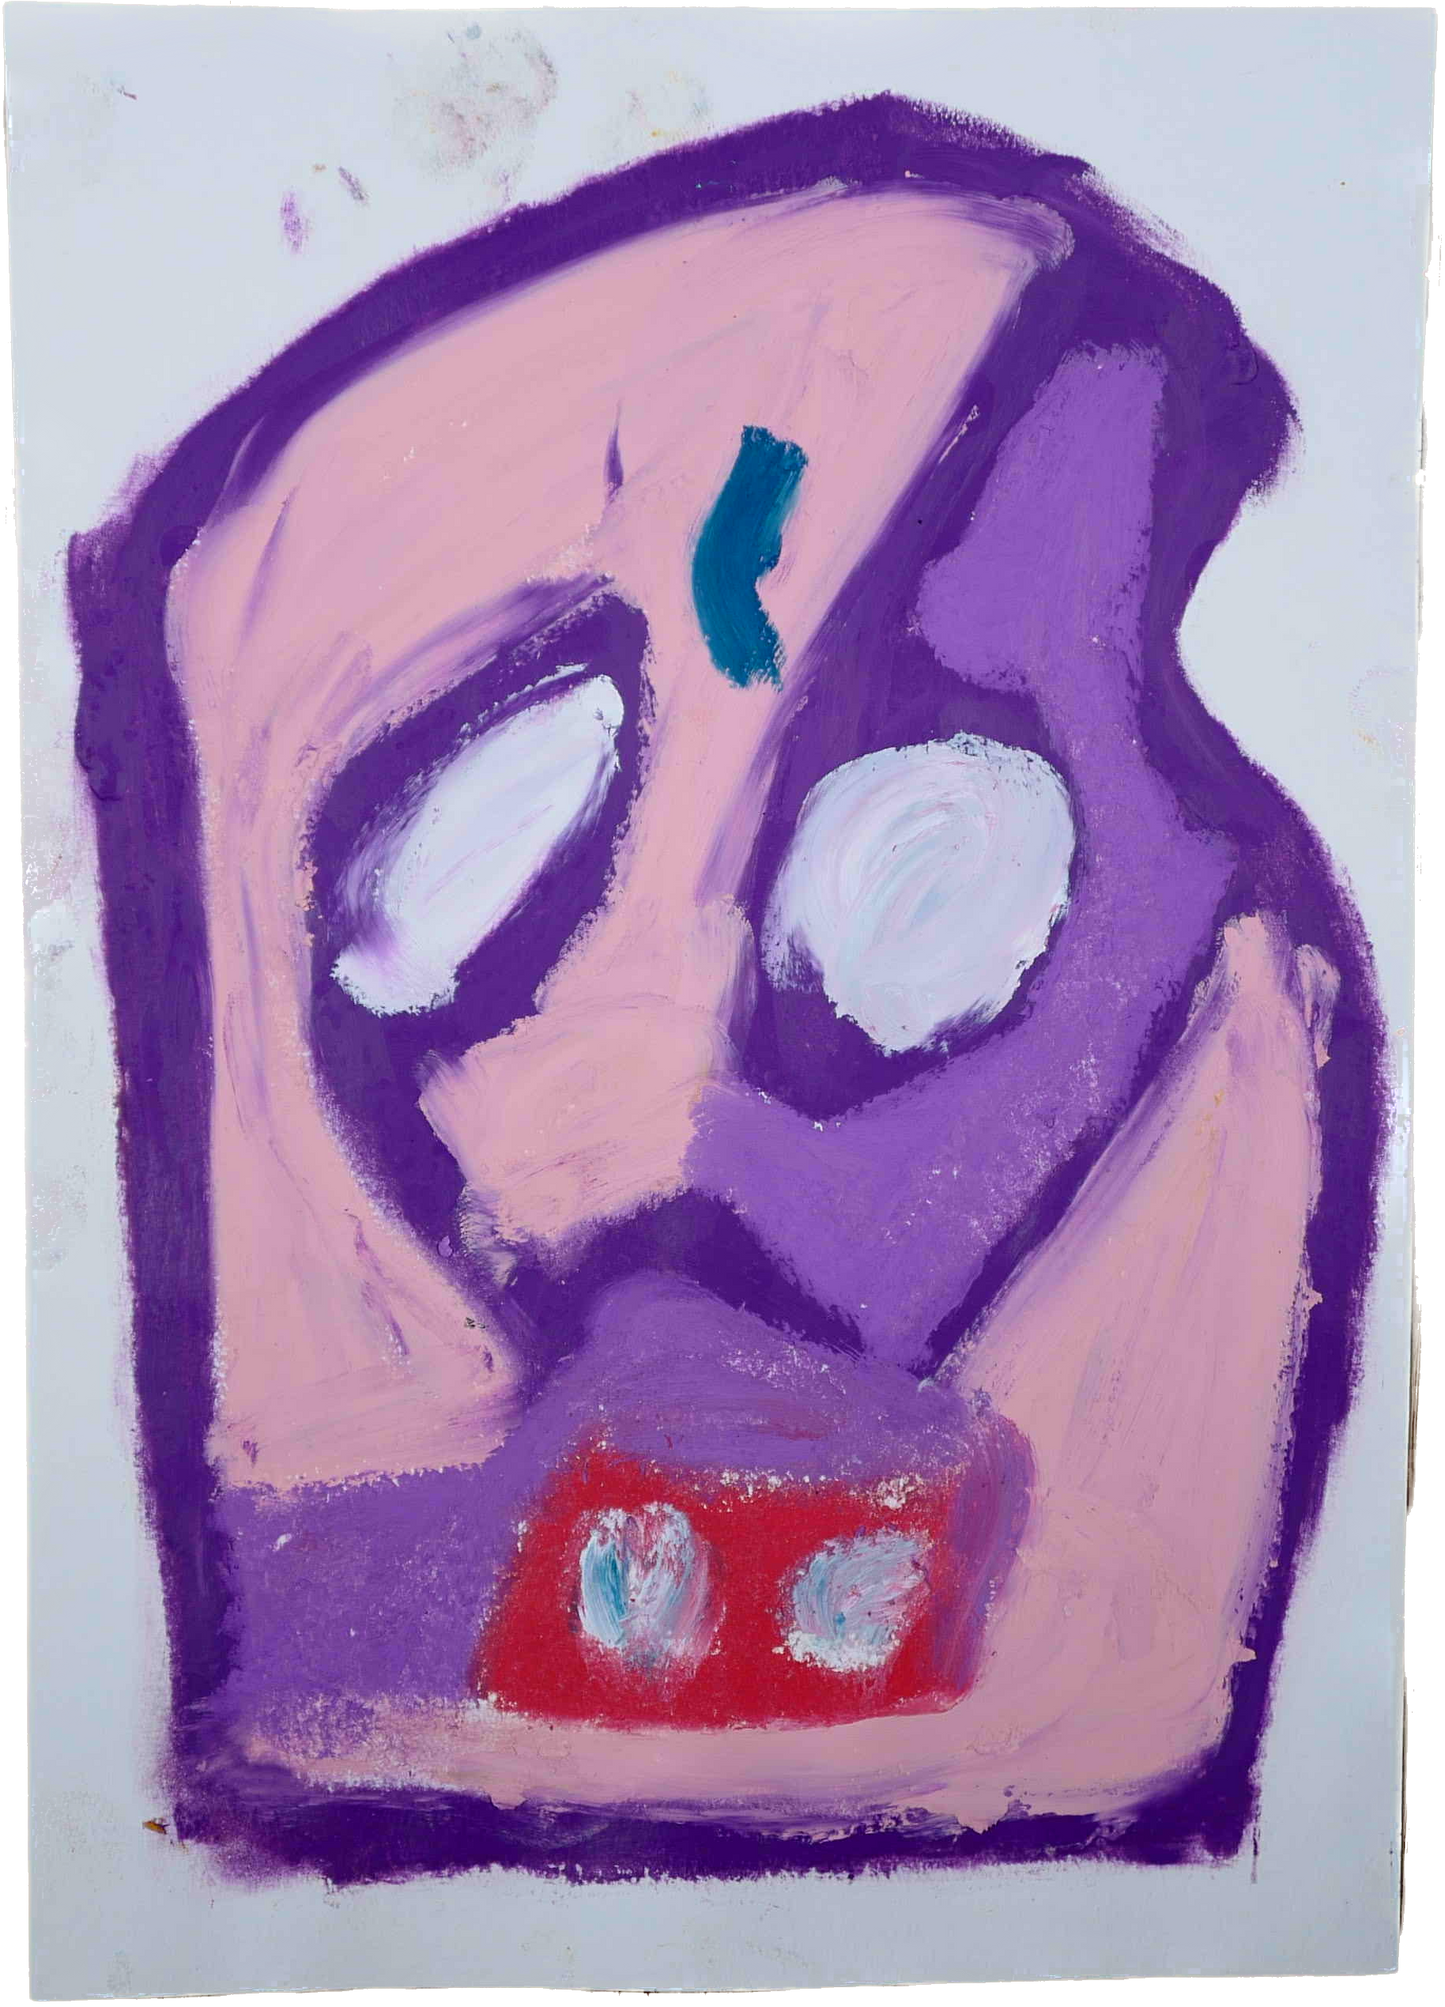 "Lenfantvivant abstract portrait in purple hues" "Expressionist-inspired Sauna Fusion artwork" "Modern abstract visage by Lenfantvivant" "Emotive facial expression in contemporary art" "Lenfantvivant's introspective piece No. 116"